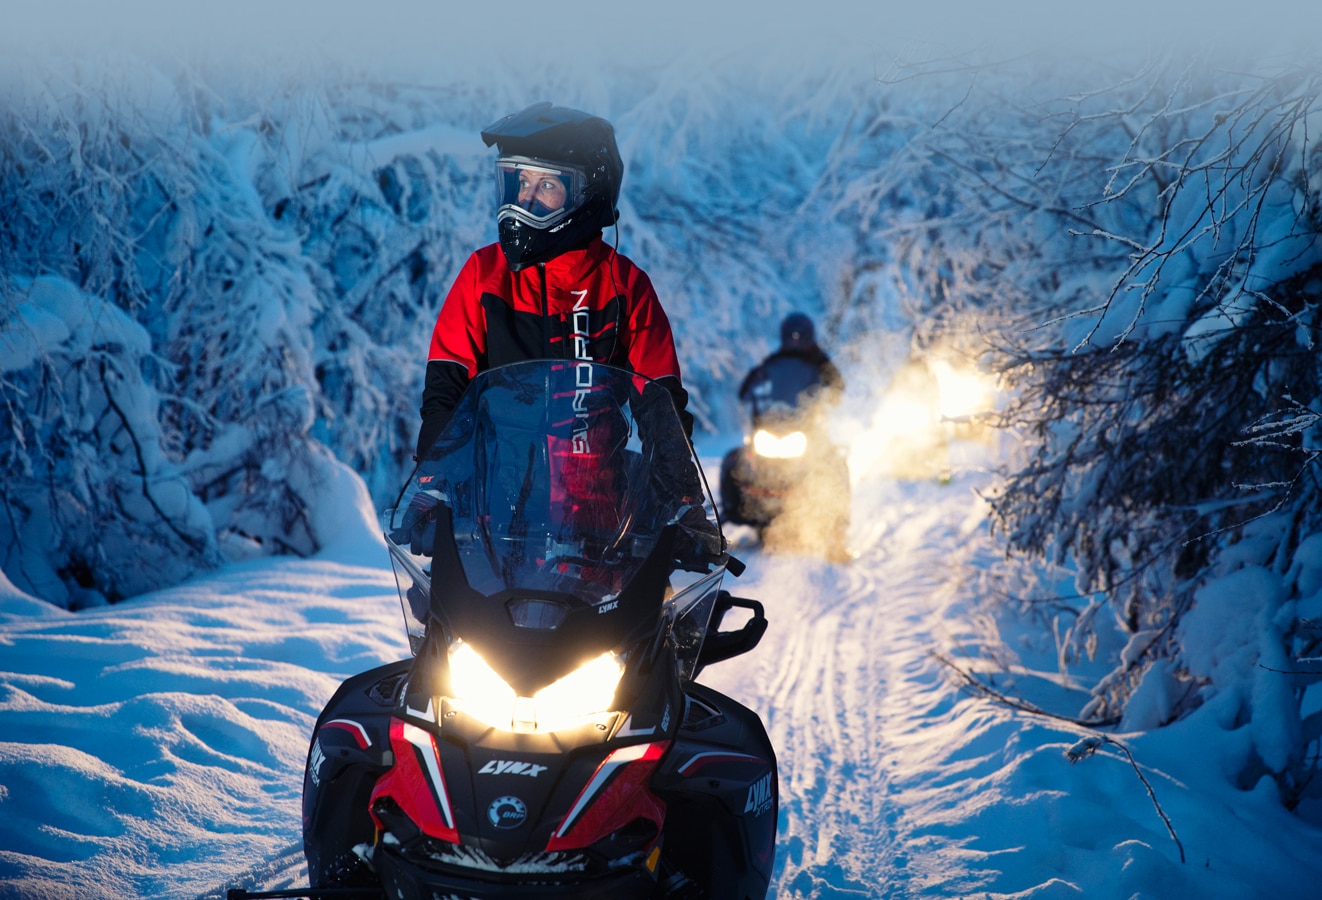  Skupina vozača slijedi snježnu stazu u šumi sa svojim modelom motornih sanki Lynx Xtrim